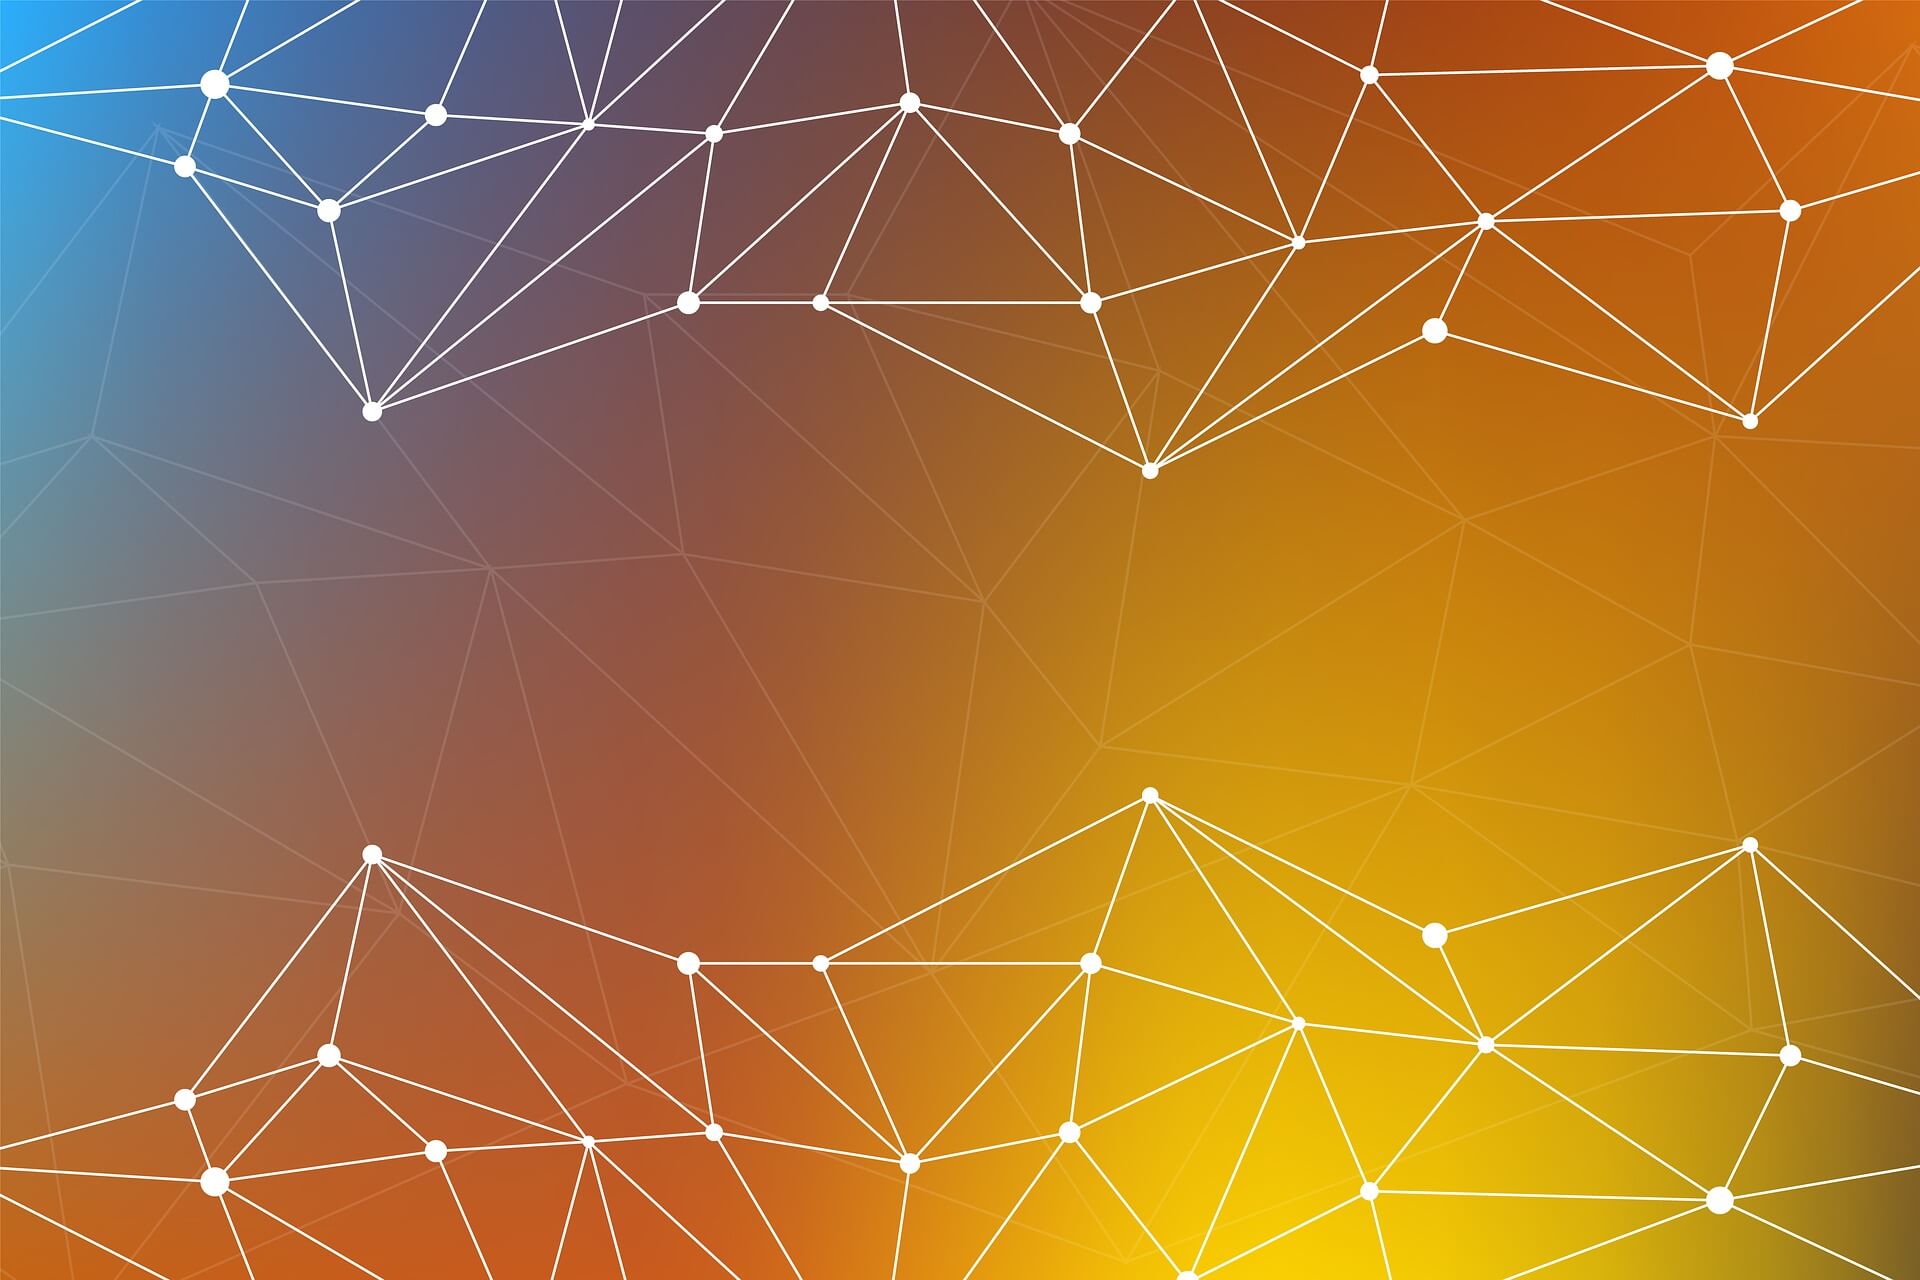 Imagen con líneas conectadas por puntos sobre fondo de colores